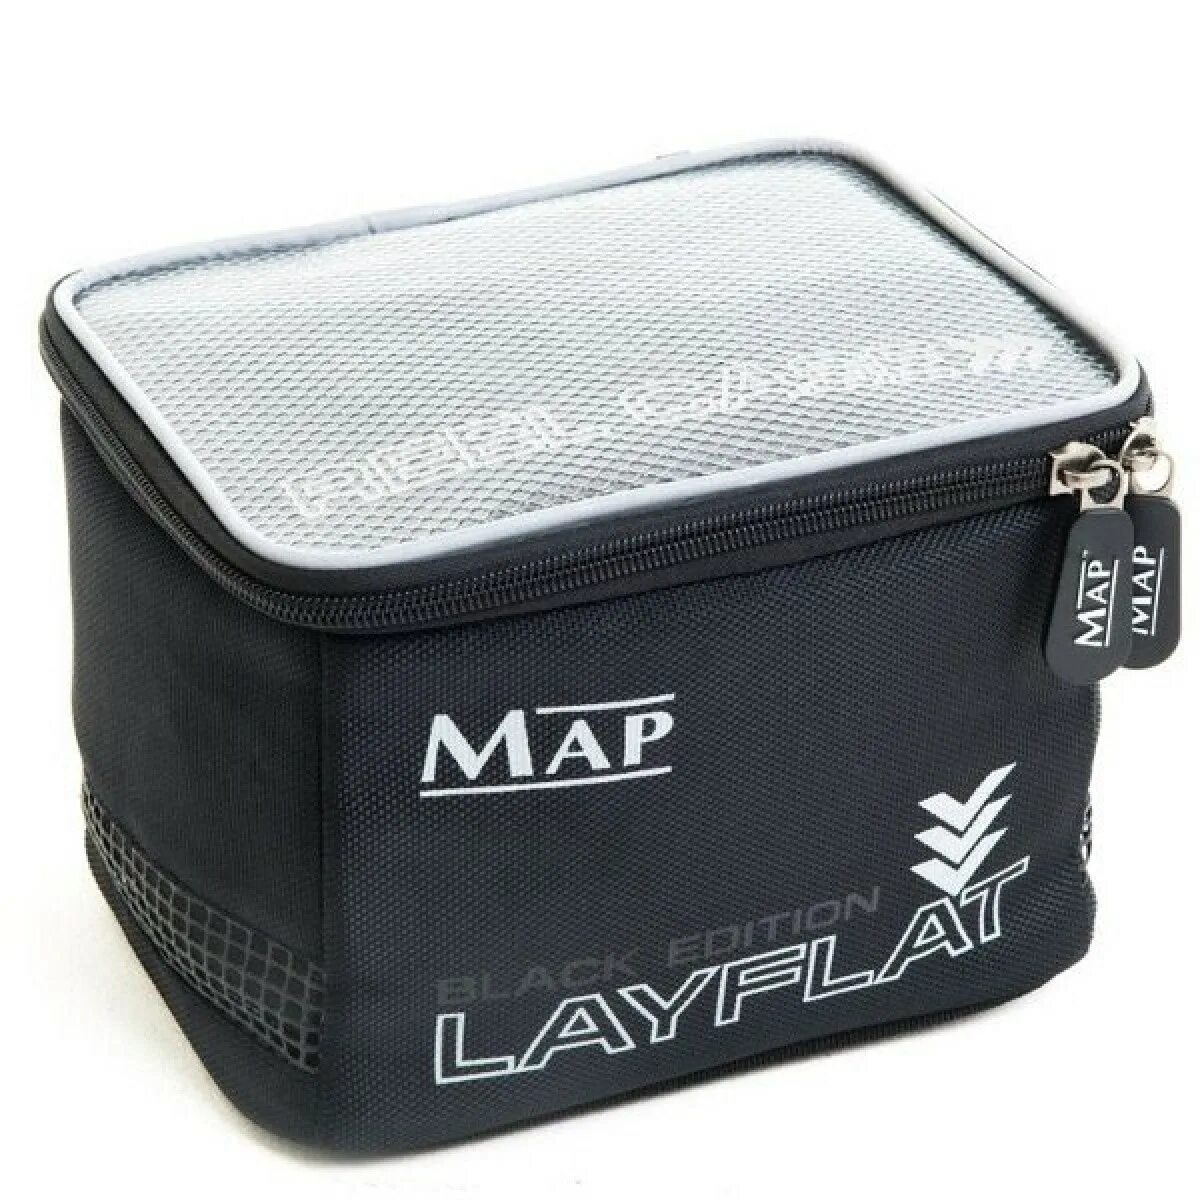 Map сумка-чехол для катушек Parabolix Layflat Black Edition Reel Case. Чехол для катушек рыболовных Daiwa. Map Parabolix Layflat Black Edition Accessory Bag. Кейс для катушек Daiwa. Тубус для катушек